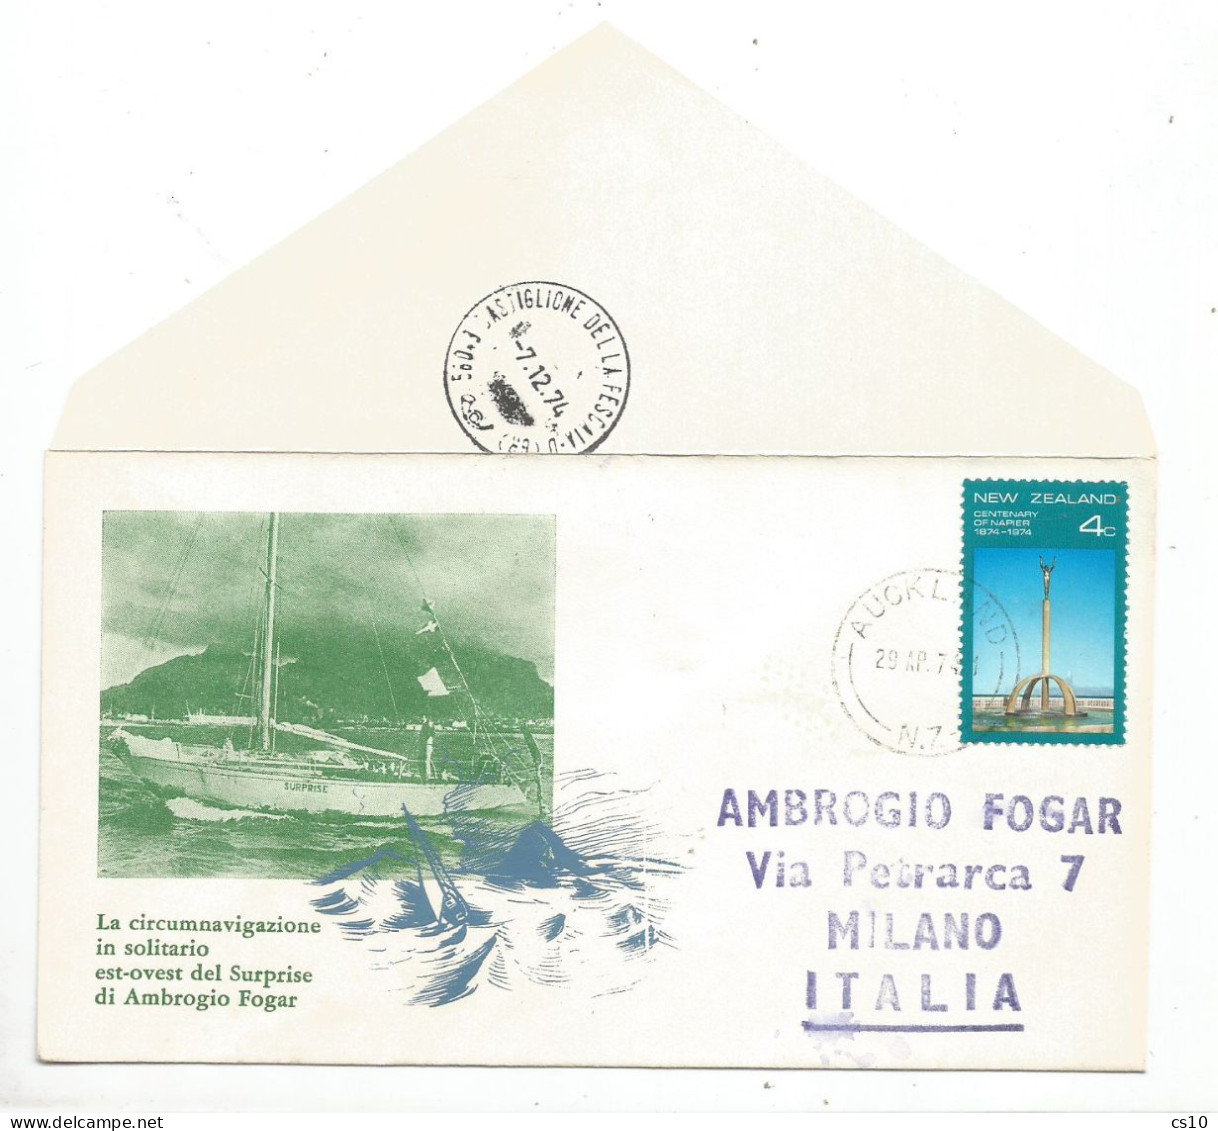 Vela Sailing SOLO Circumnavigation - Ambrogio Fogar On Surprise Yacht - Official CV Auckland 29apr1974 X Italy 7dec74 - Segeln